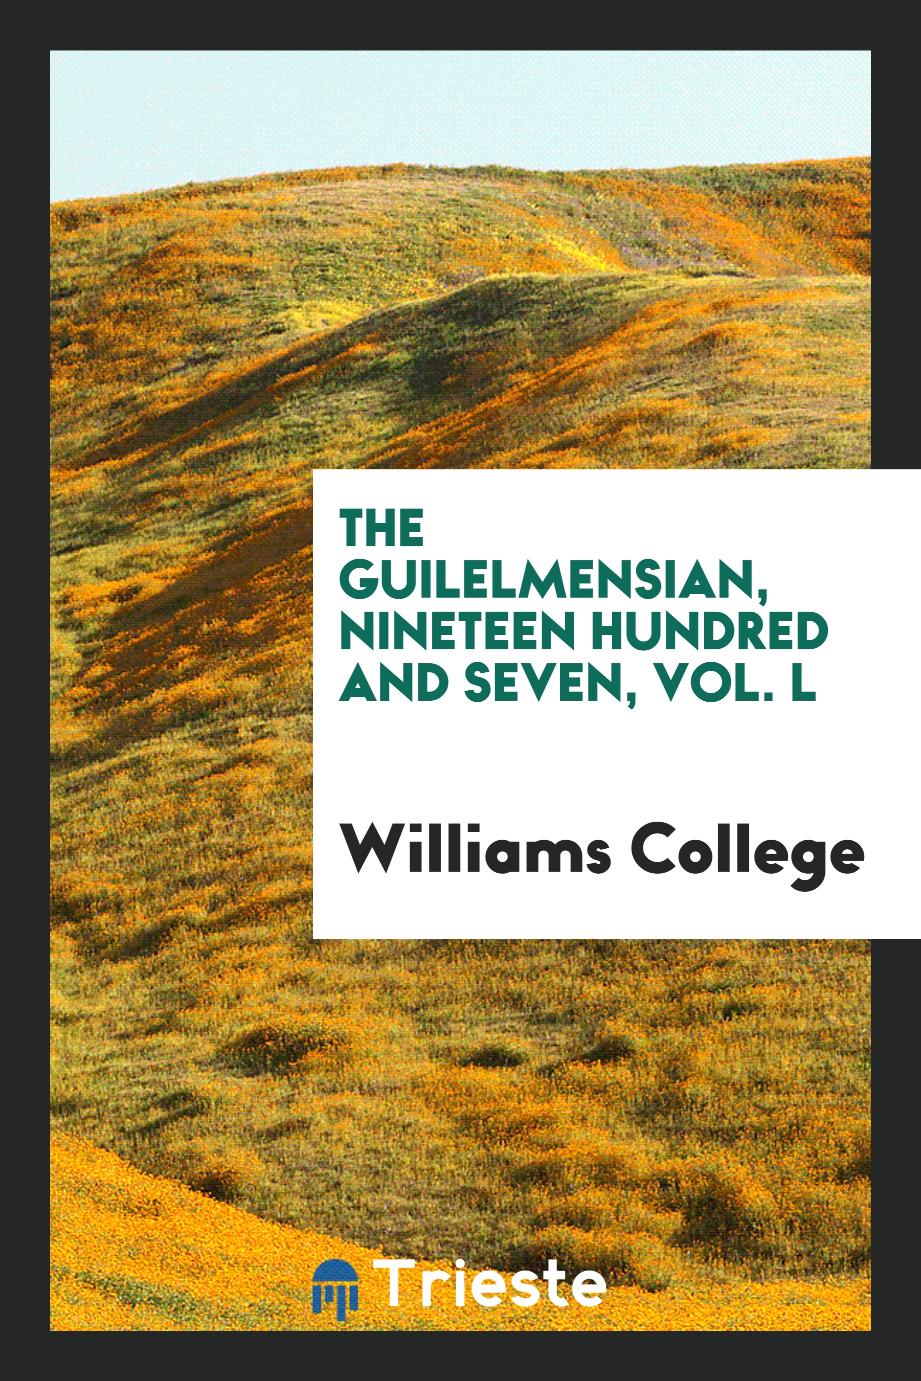 The Guilelmensian, Nineteen Hundred and Seven, Vol. L